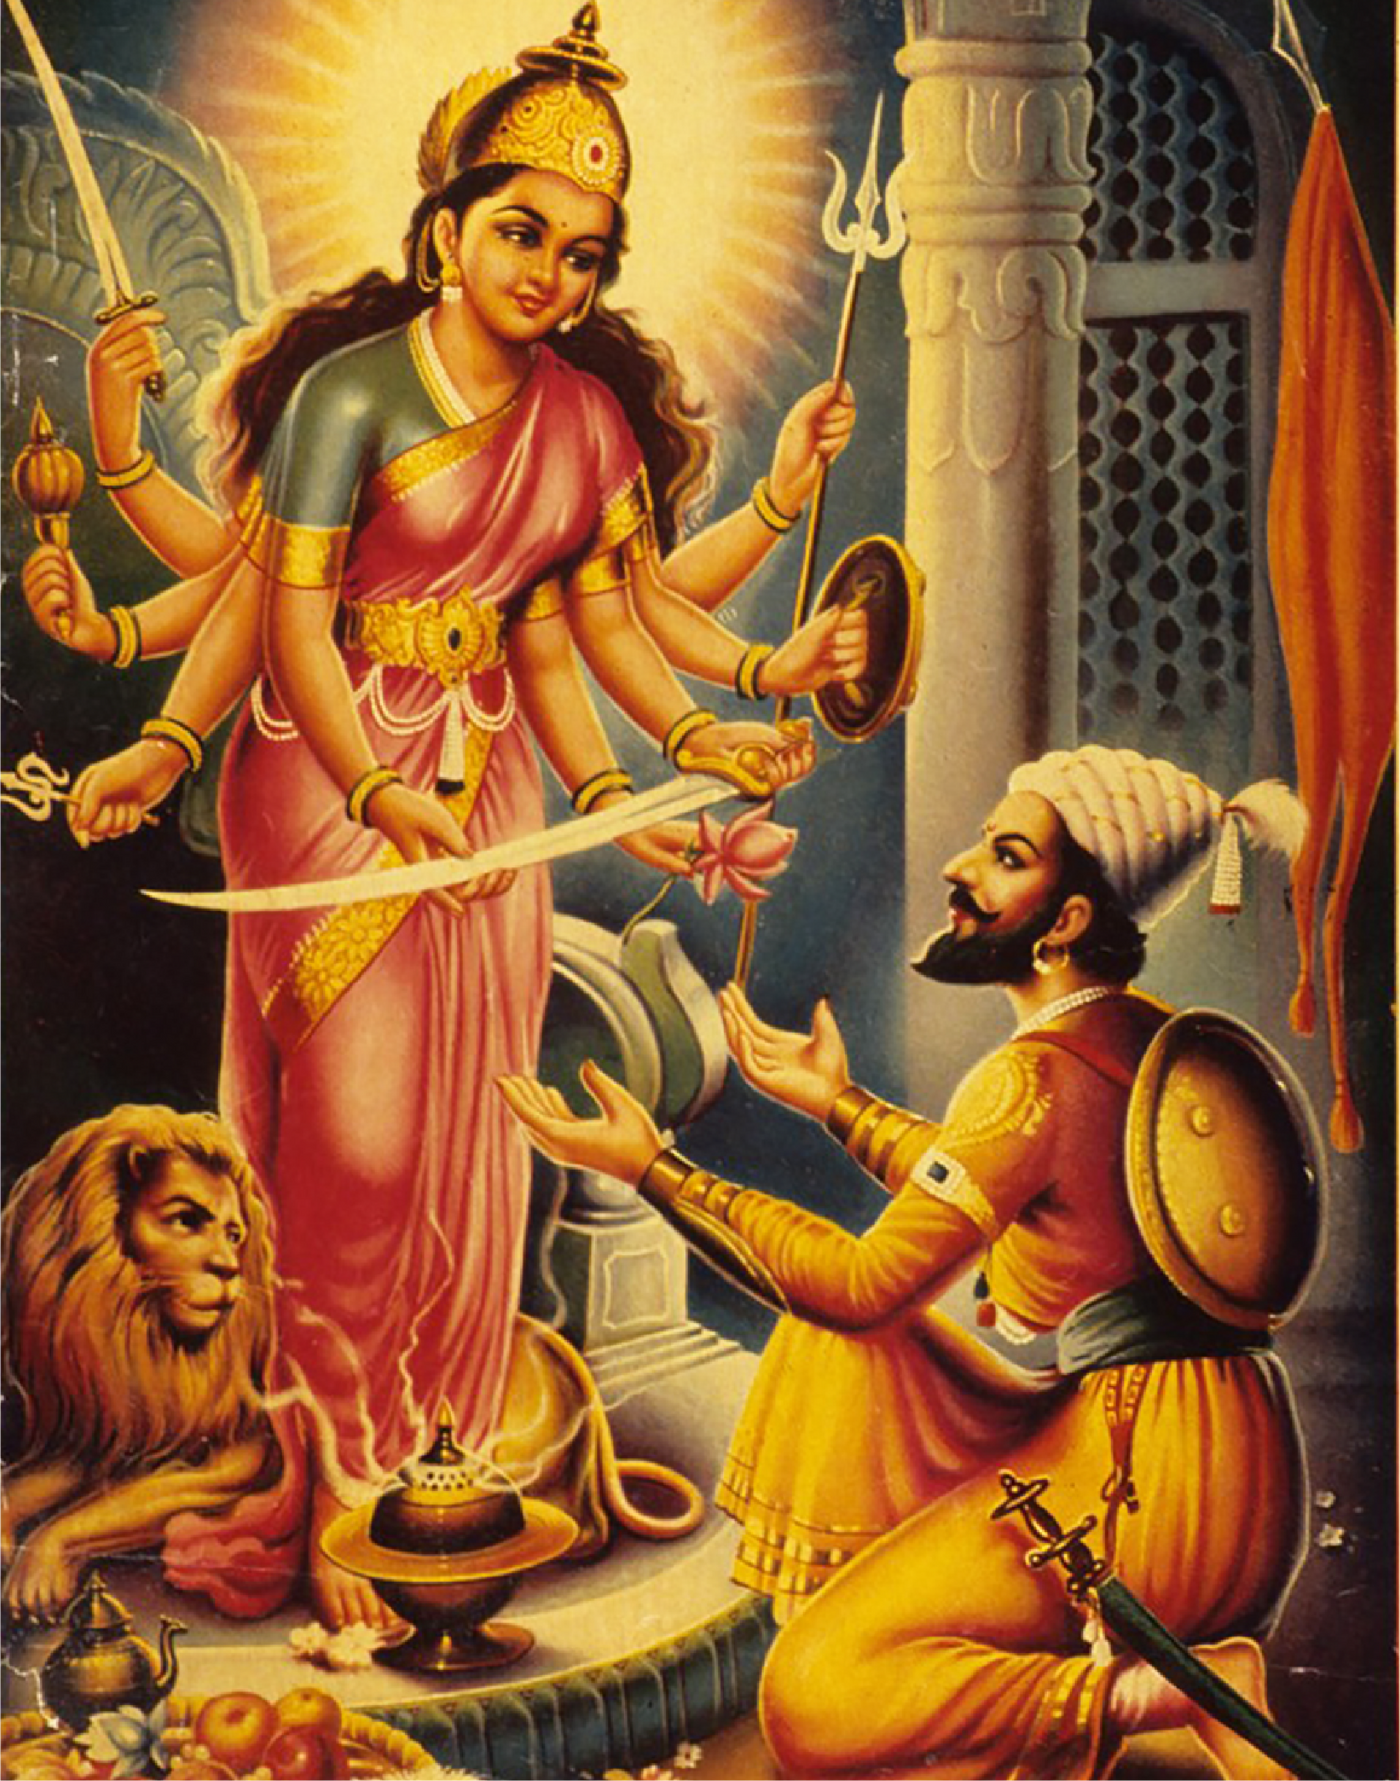 The Goddess and Shivaji Art Print